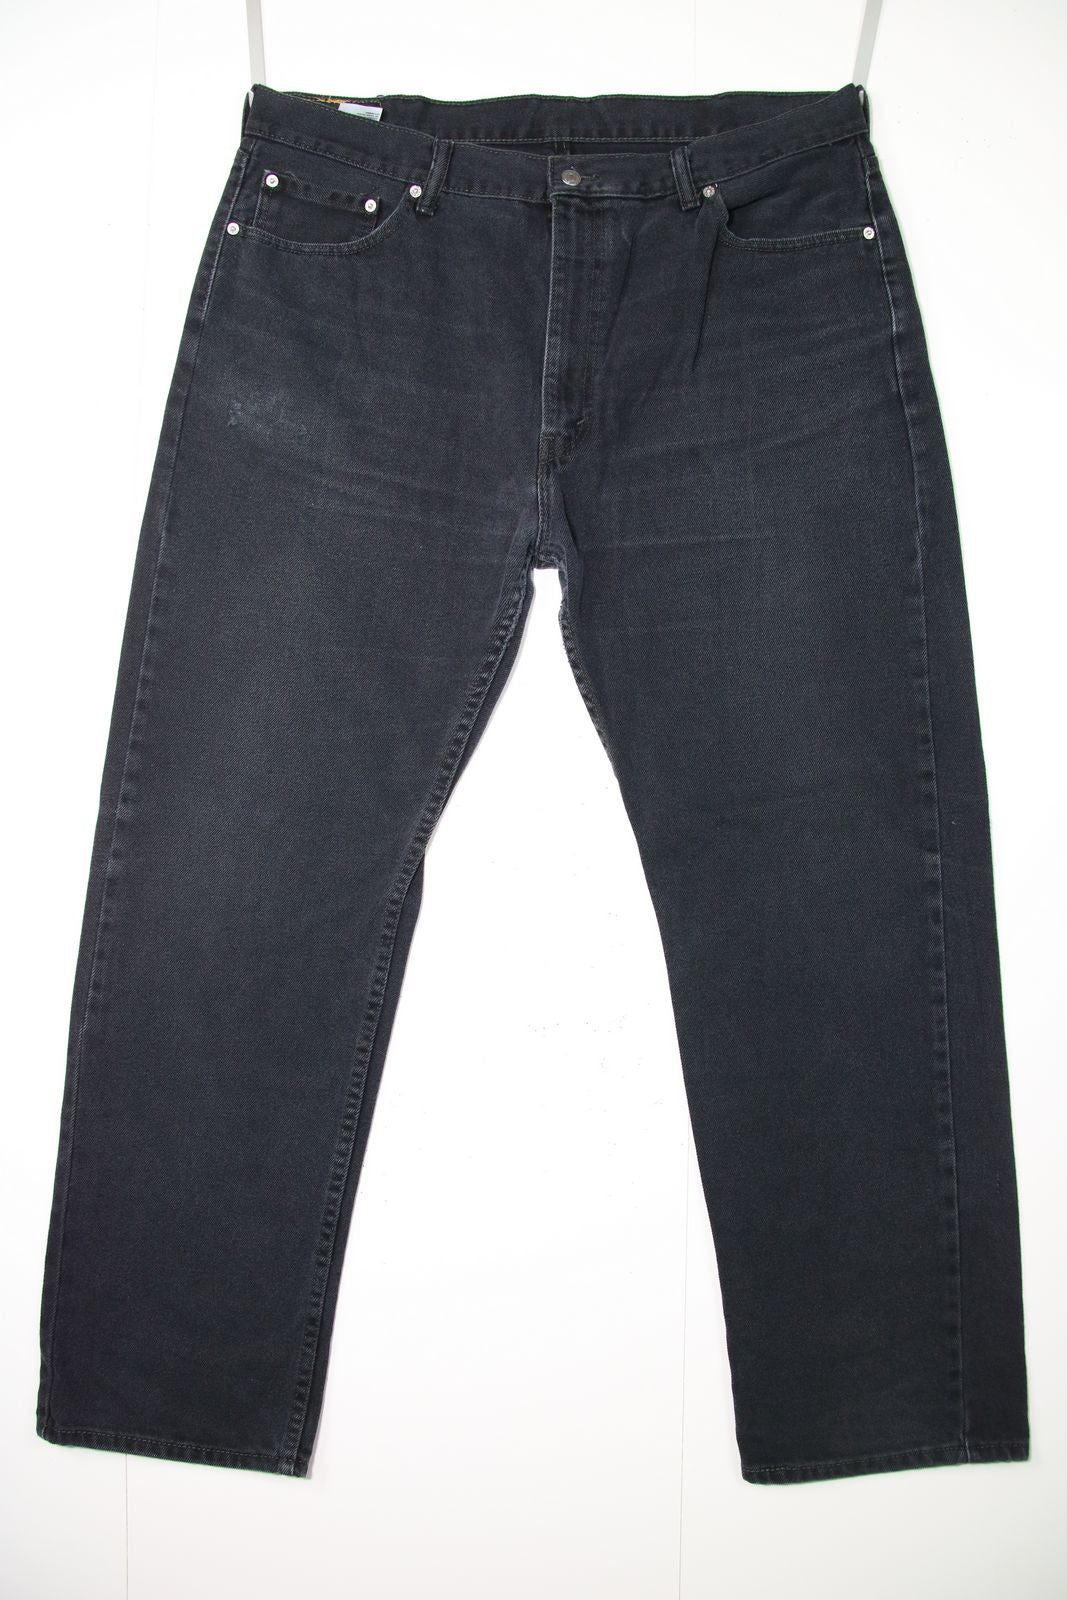 Levi's 505 Nero Denim W42 L32 Jeans Vintage Made in USA